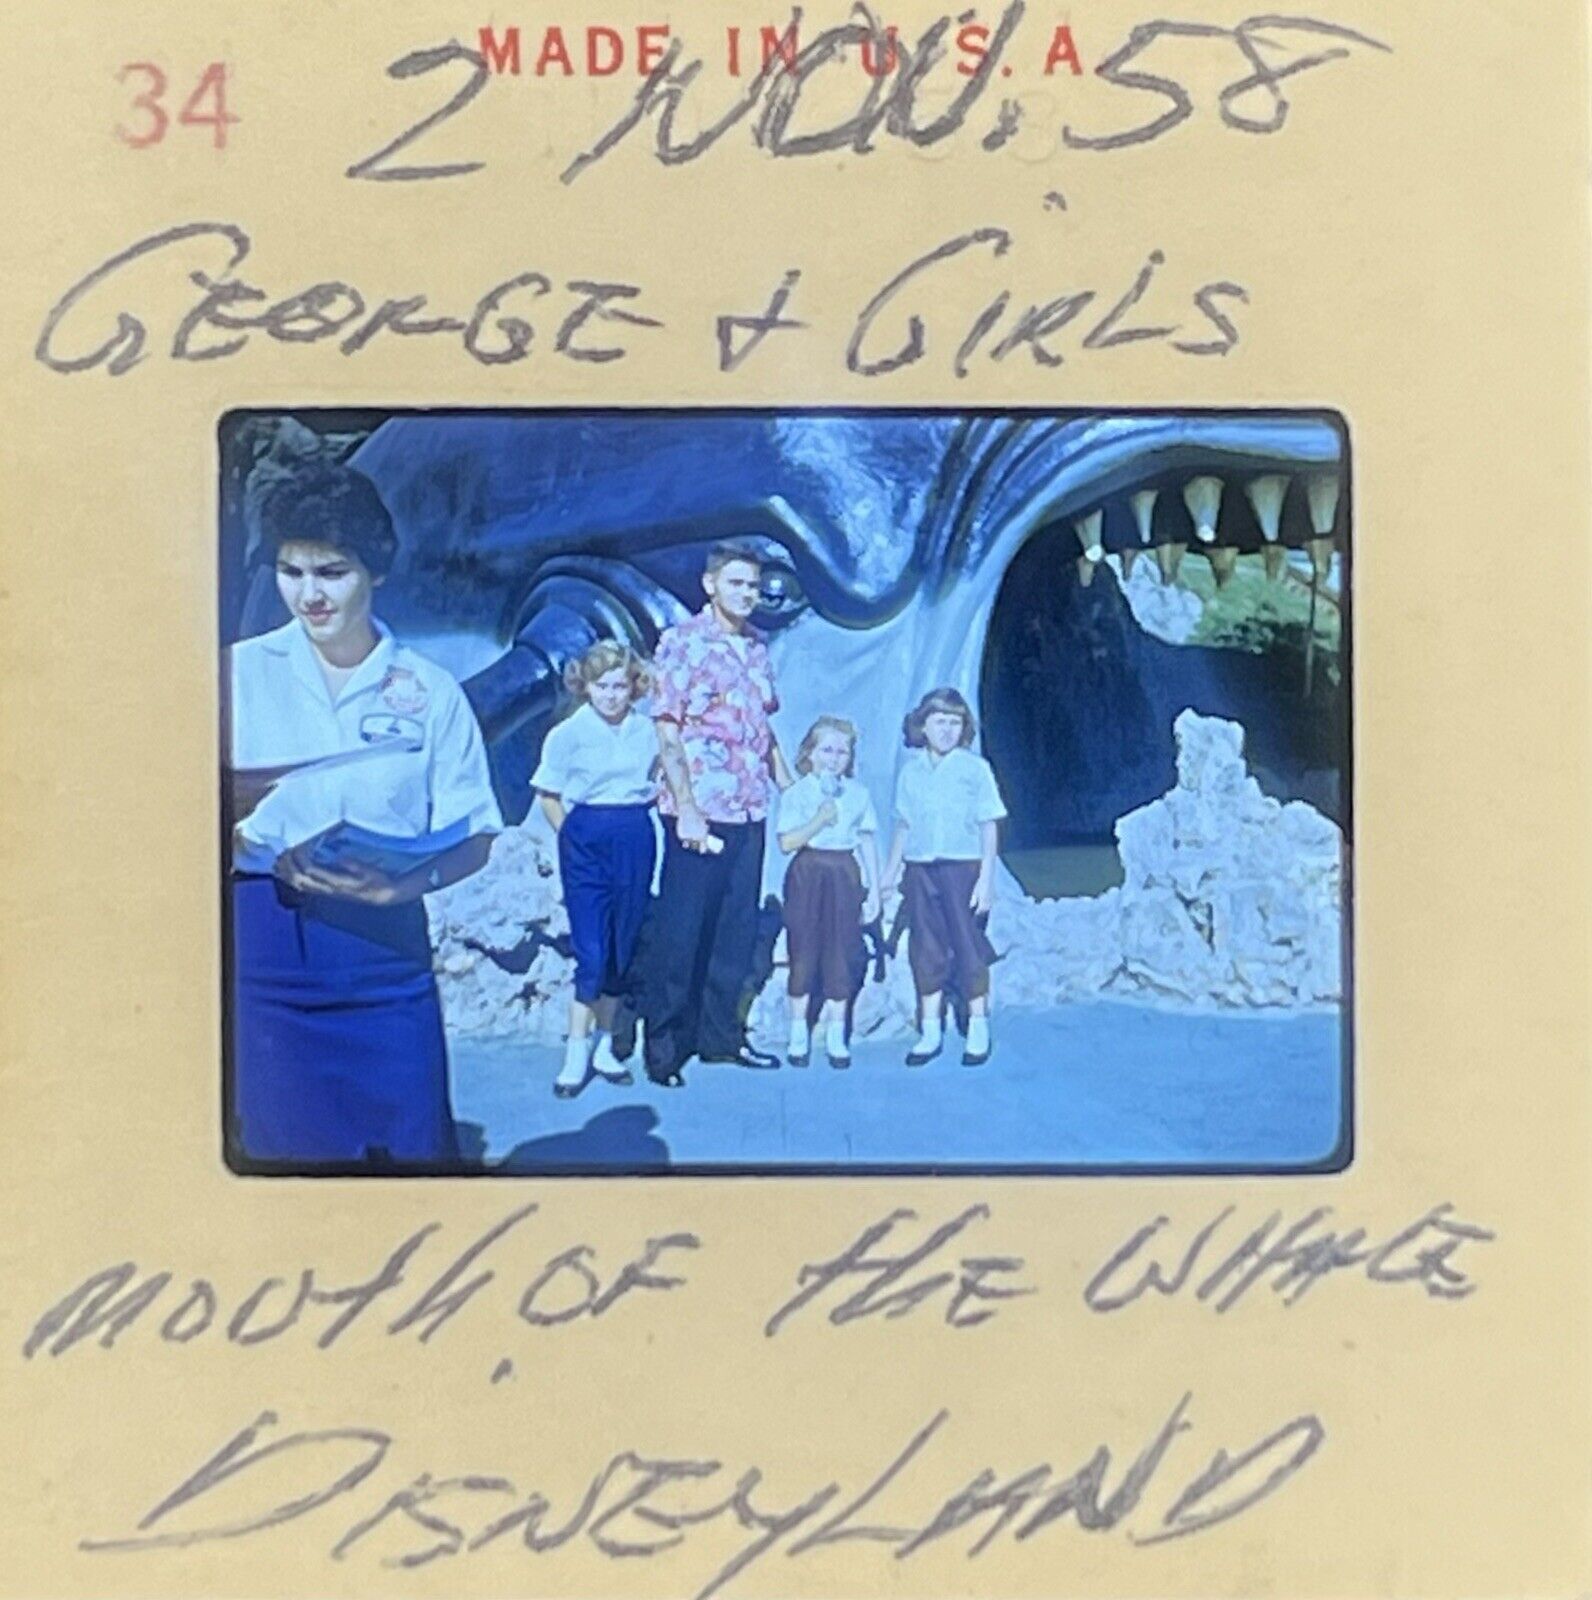 Vintage Photo Slide 35mm 1958 Disneyland Storybook Land Mouth of the Whale MCM